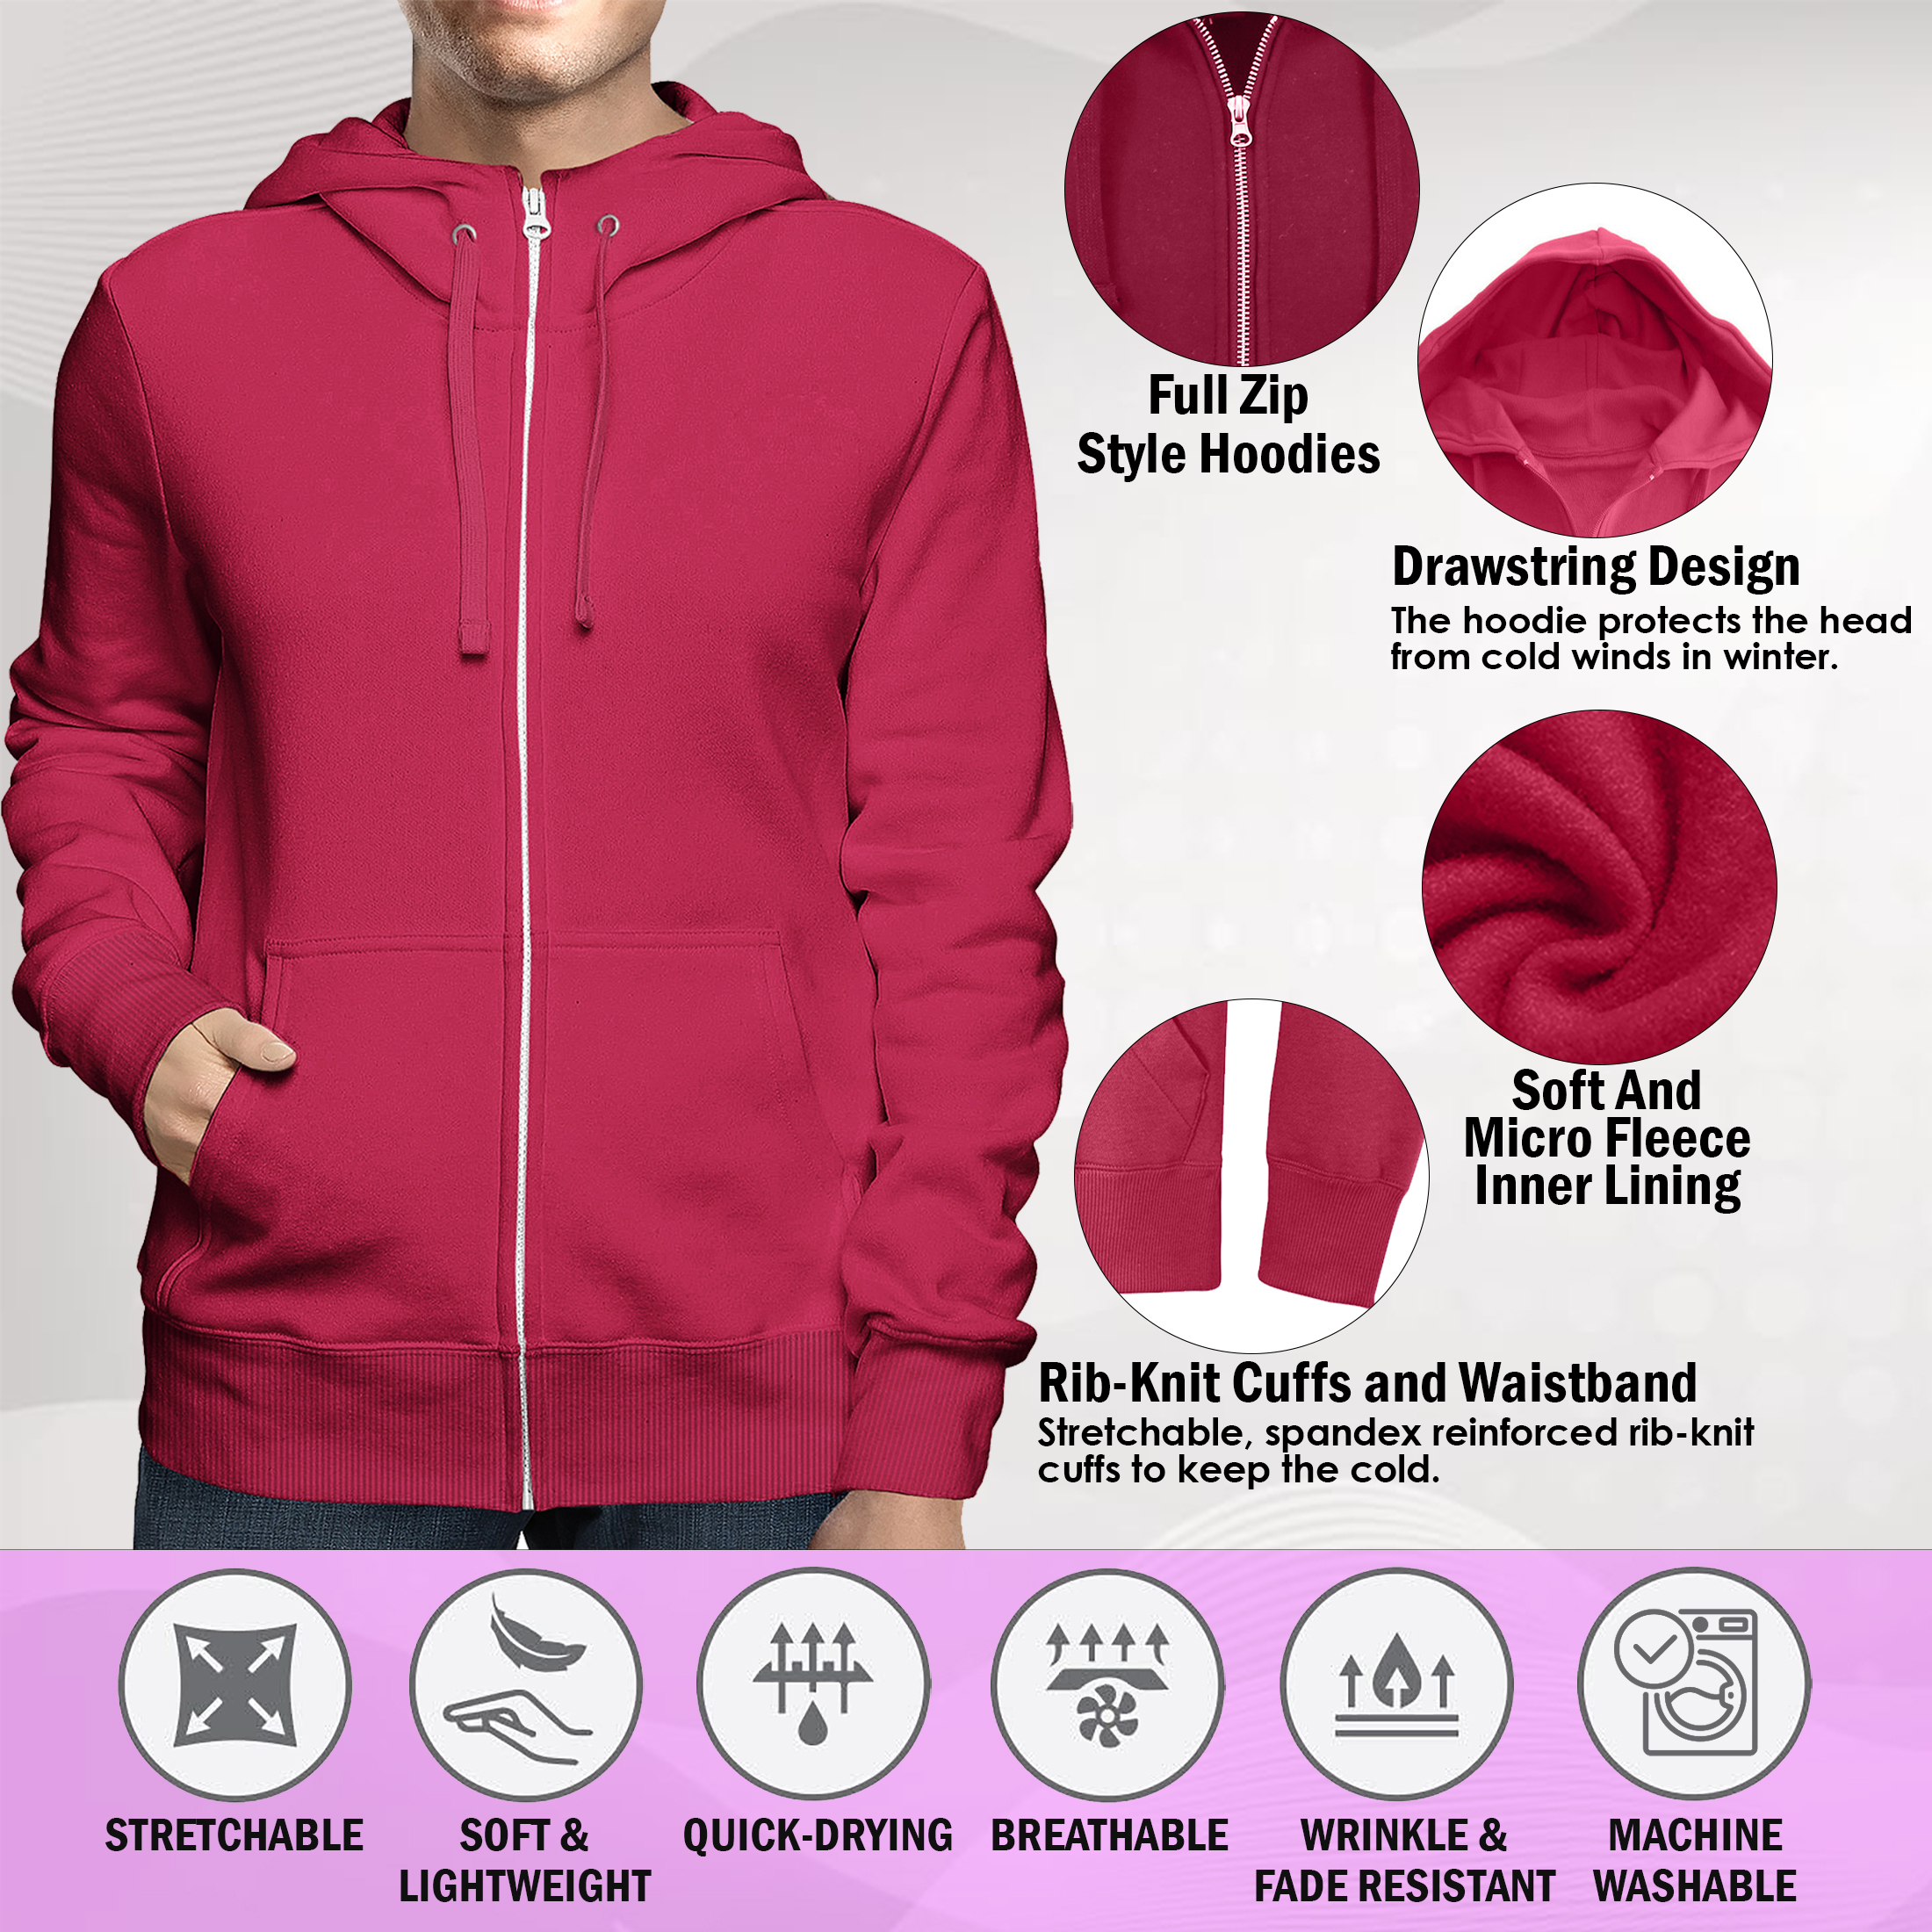 2-Pack: Men's Full Zip Up Fleece-Lined Hoodie Sweatshirt (Big & Tall Size Available) - Gray & Burgundy, Medium